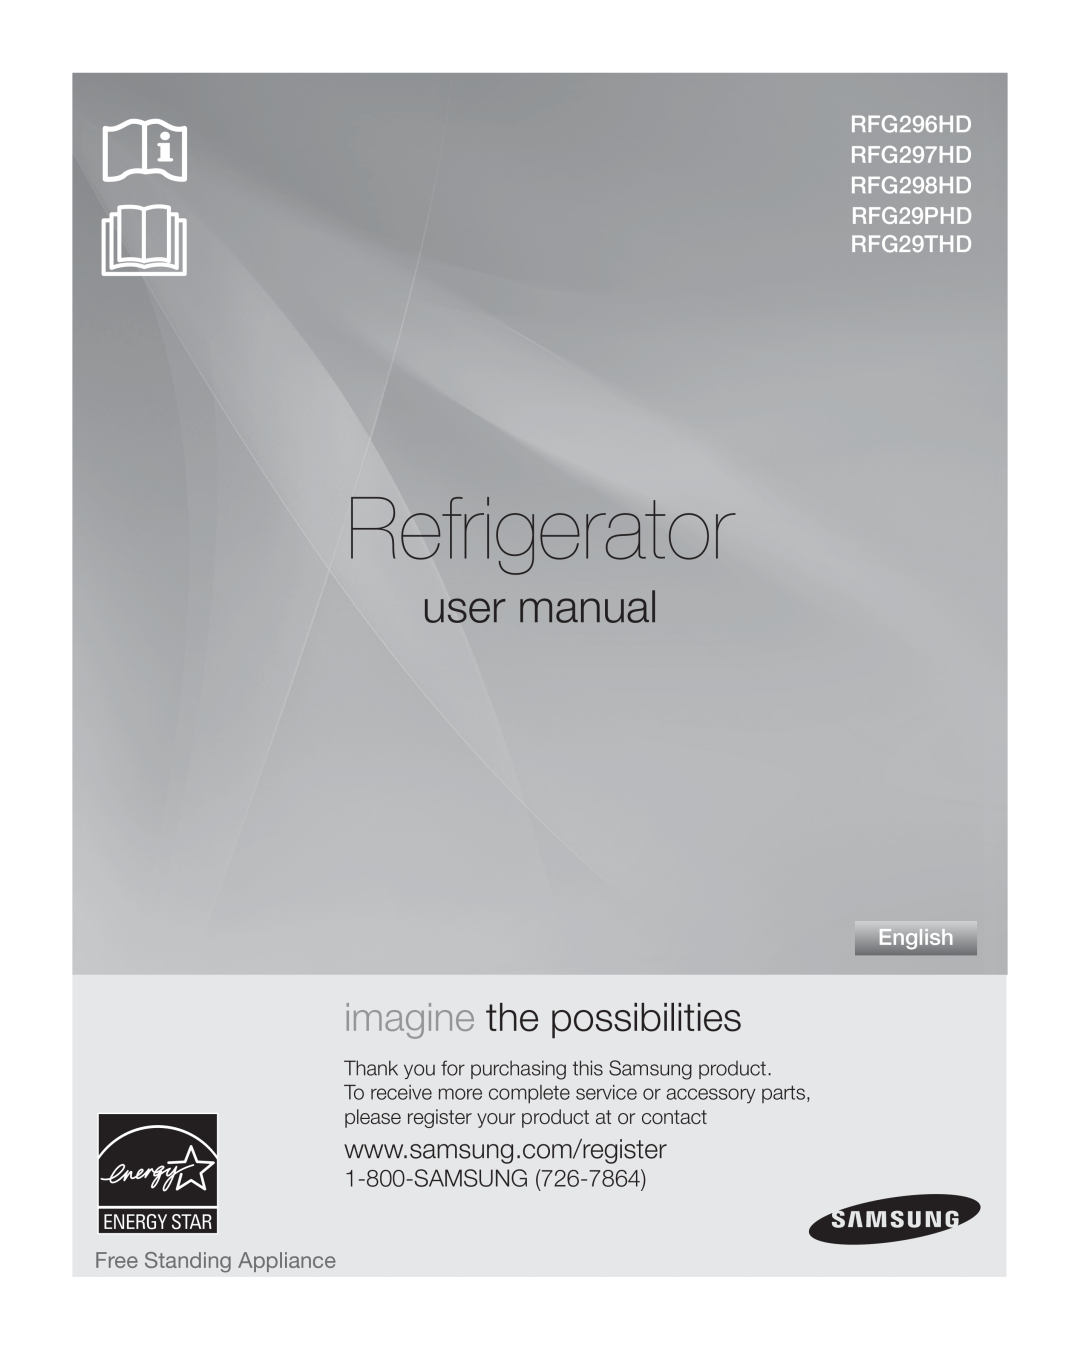 Samsung user manual Refrigerator, imagine the possibilities, RFG296HD RFG297HD RFG298HD RFG29PHD RFG29THD, Samsung 